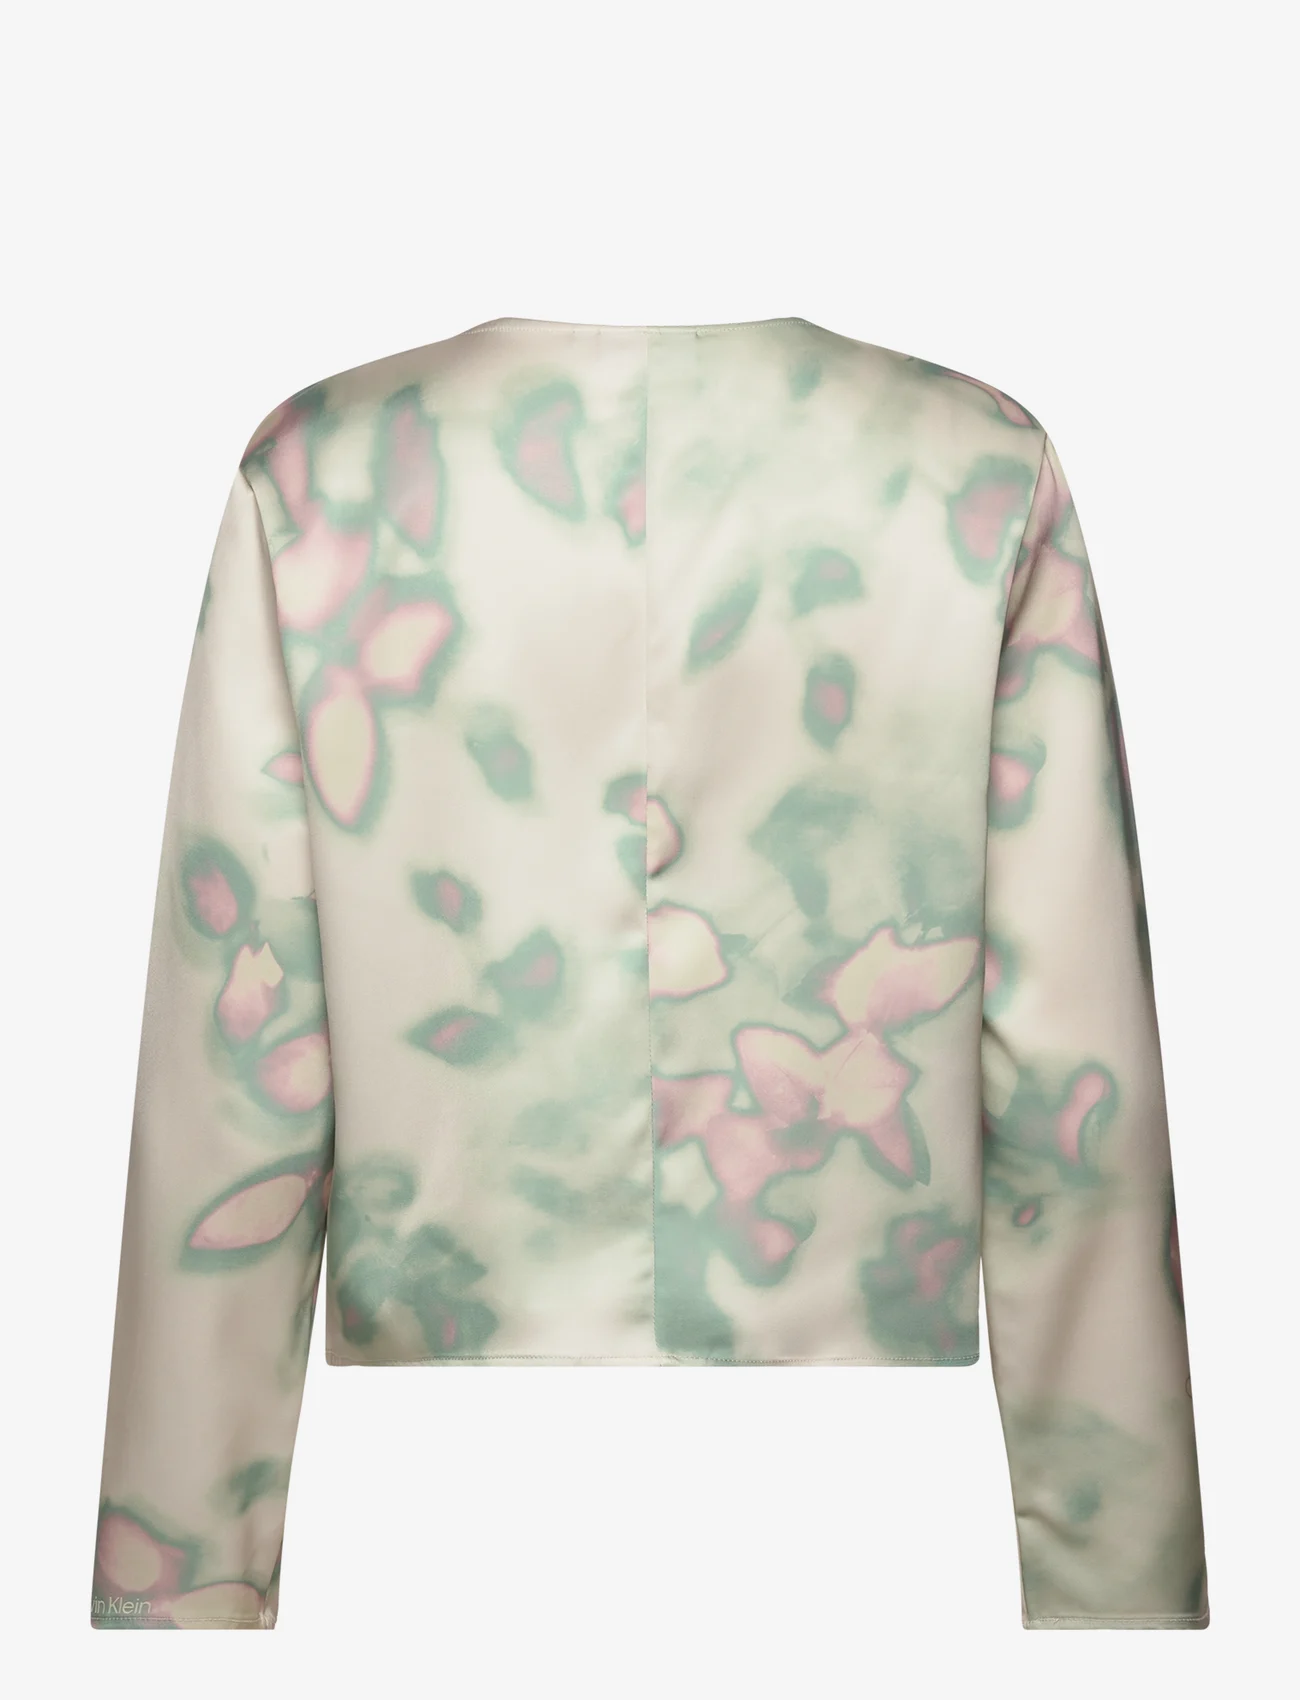 Calvin Klein - LIGHT WEIGHT SATIN LS SHIRT - blouses met lange mouwen - solarized floral print / rainy day - 1